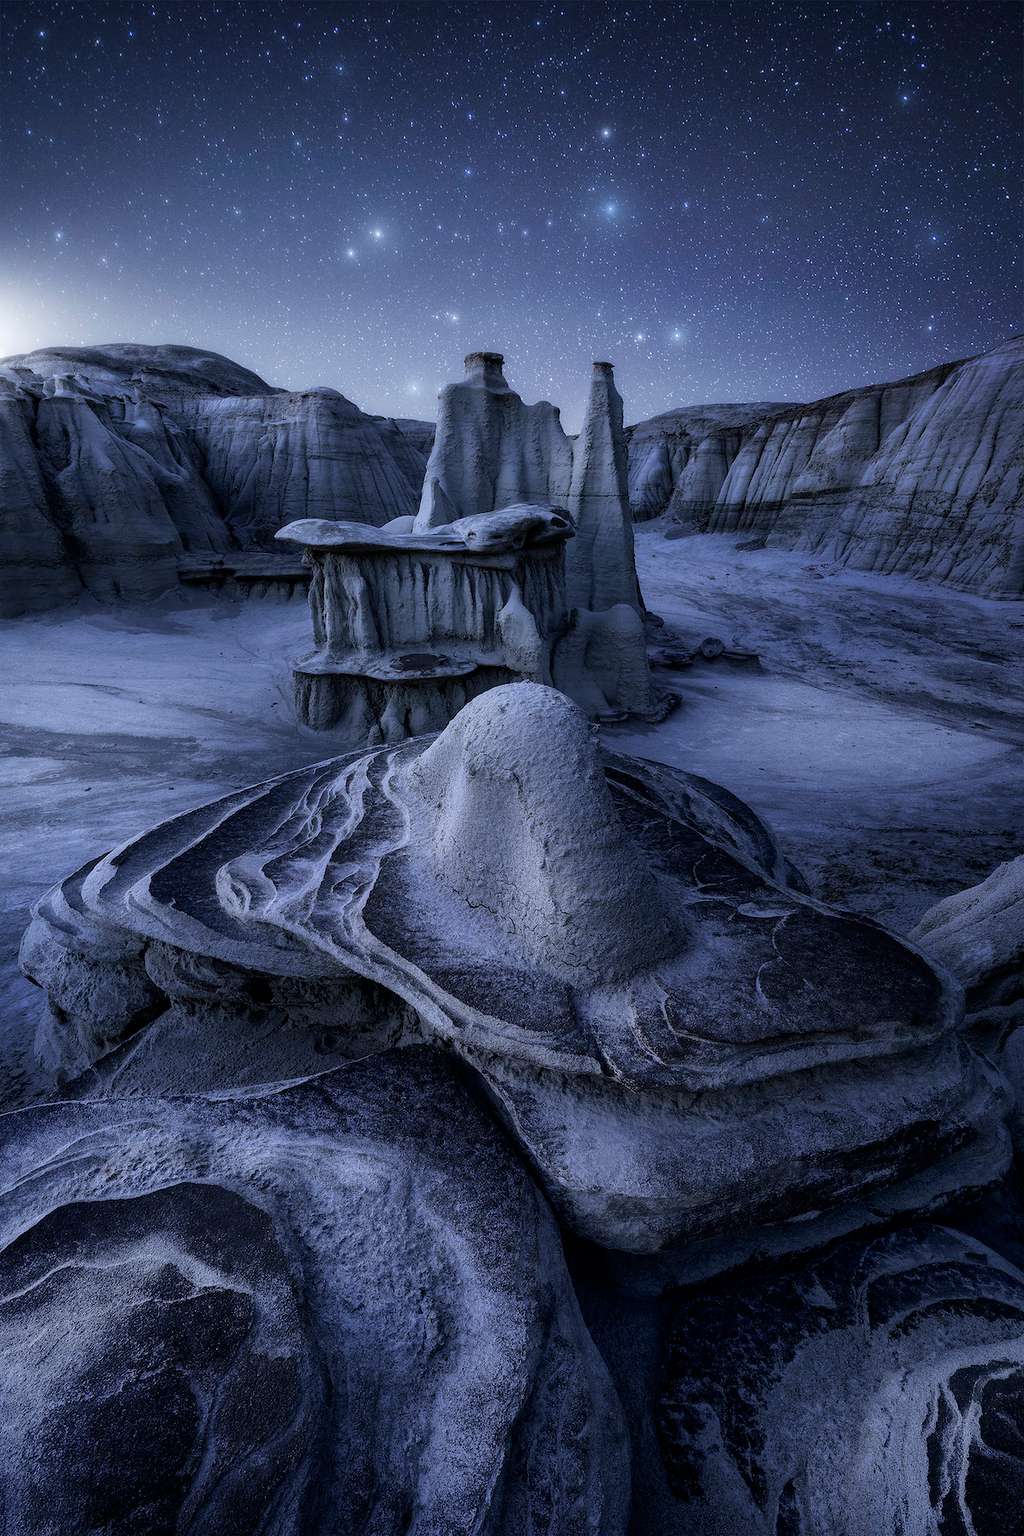 Interstellar, Bisti Badlands, Nouveau-Mexique, États-Unis